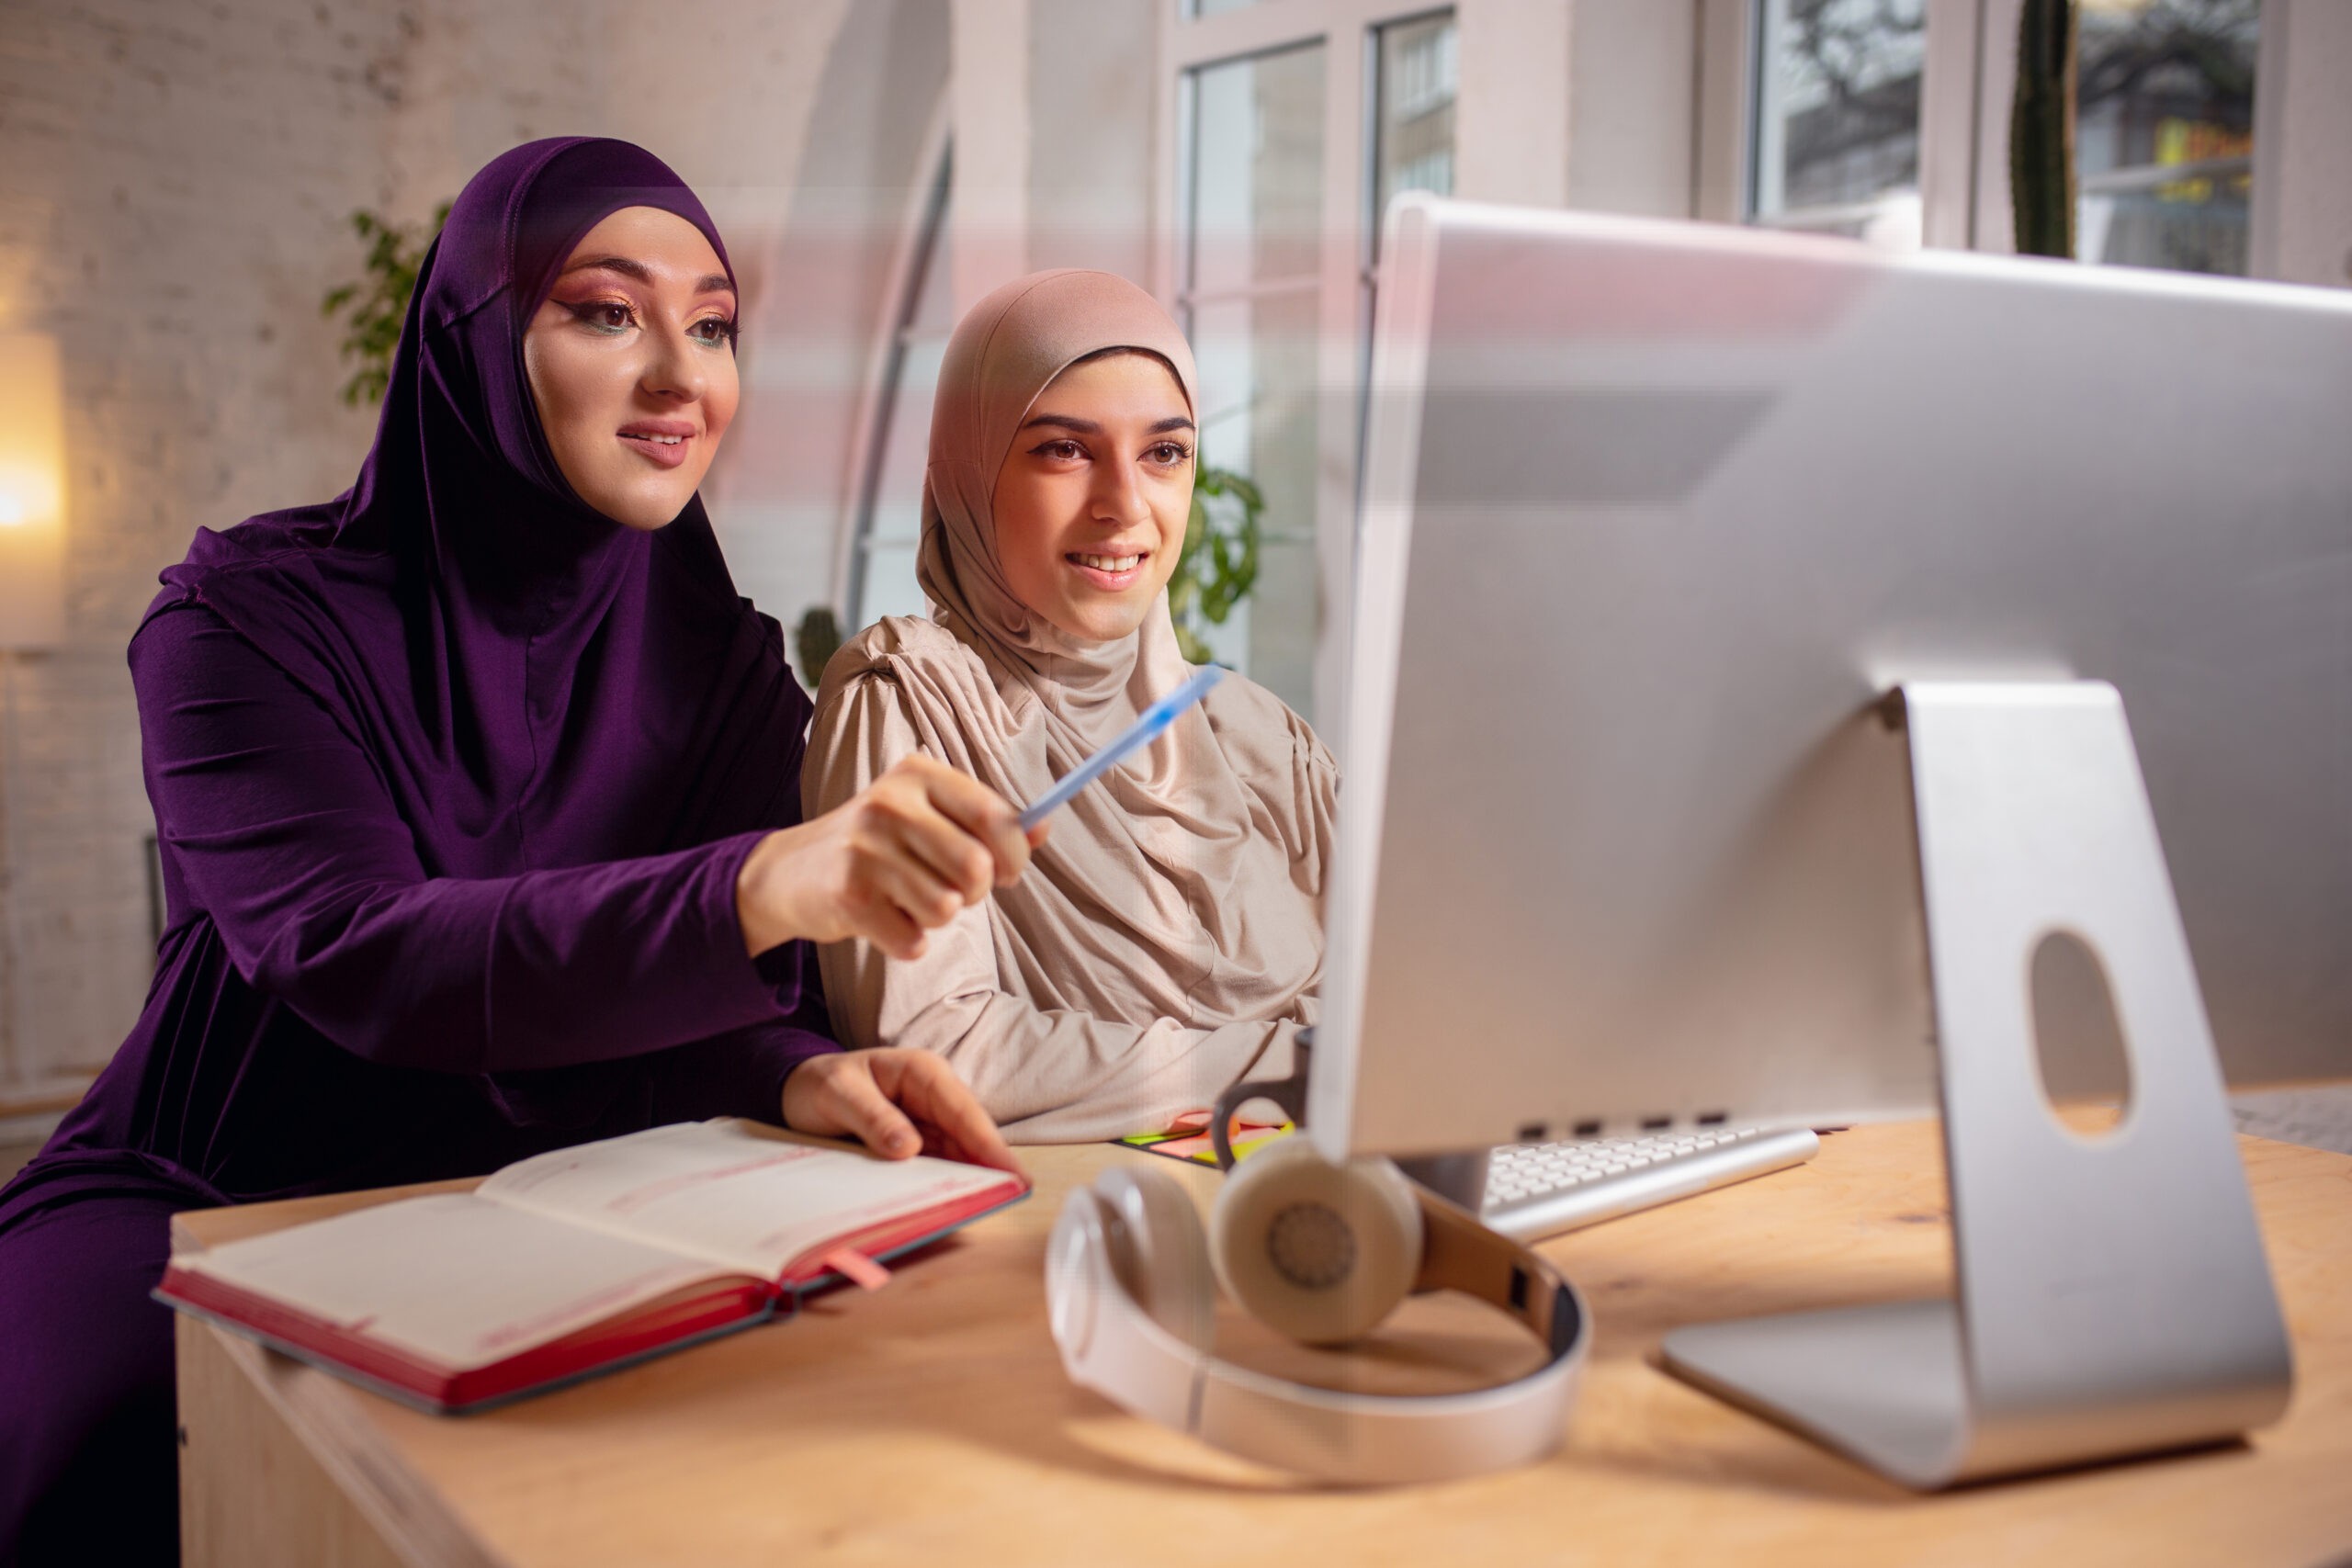 You are currently viewing 50 روش برای یادگیری زبان عربی در منزل